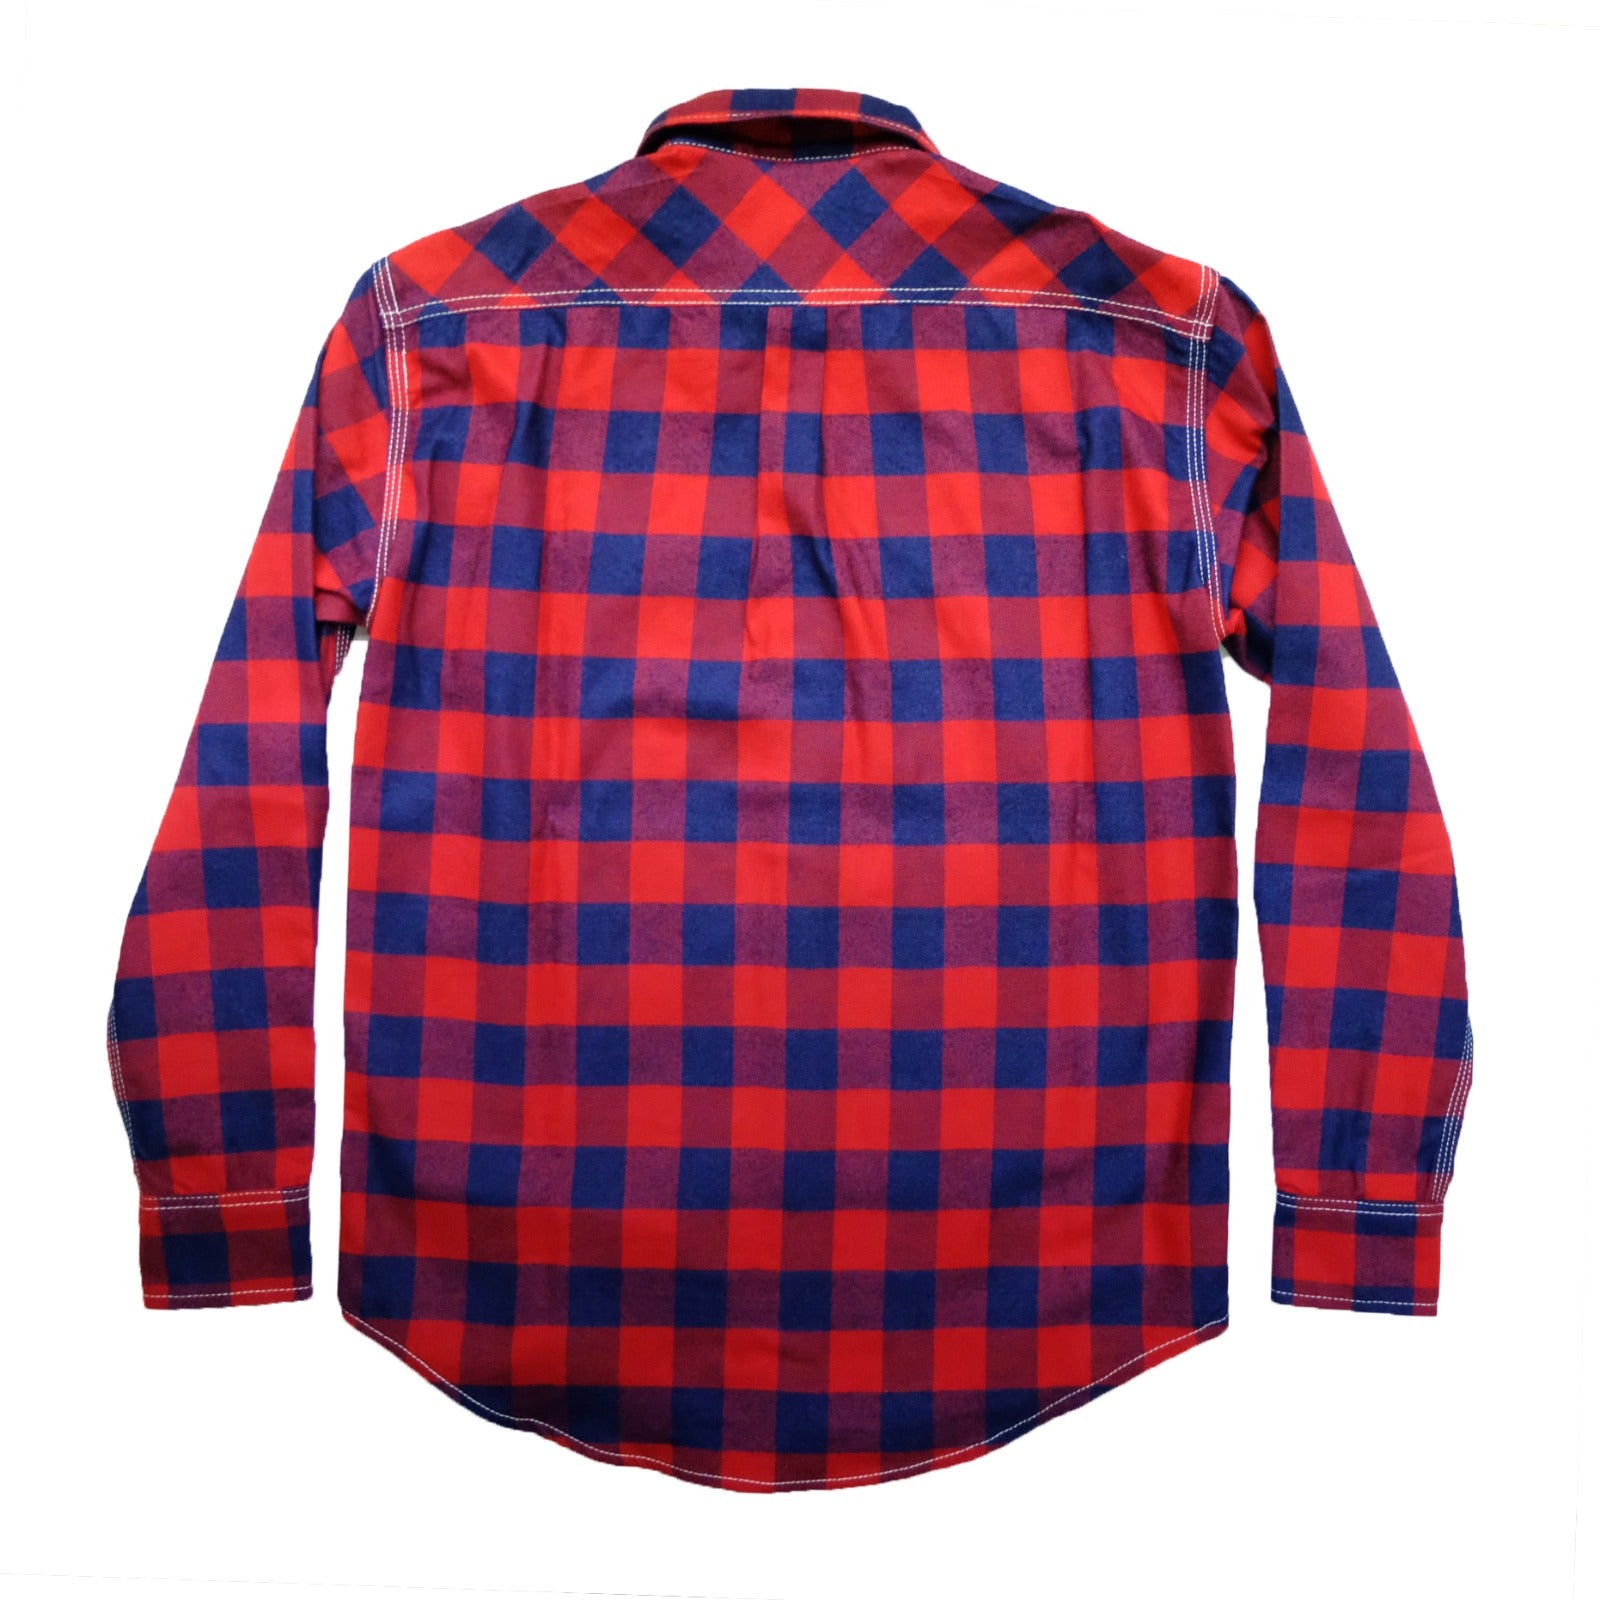 Plaid red flannel shirt